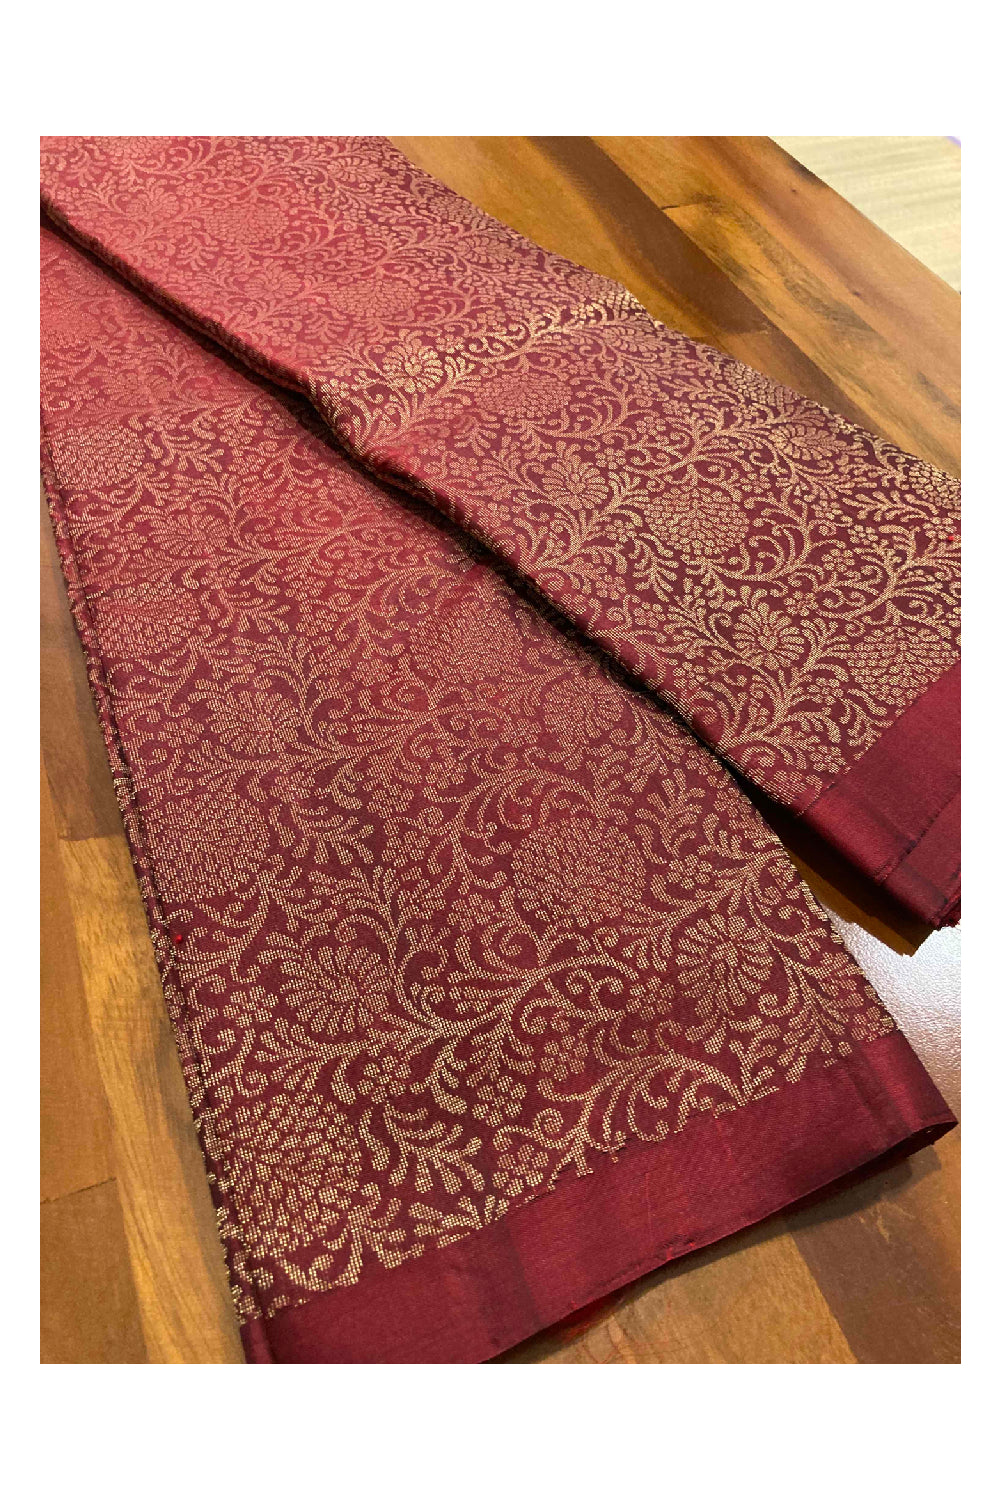 Southloom Handloom Pure Silk Manthrakodi Kanchipuram Saree in Single Crimson Red Colour and Golden Zari Motifs